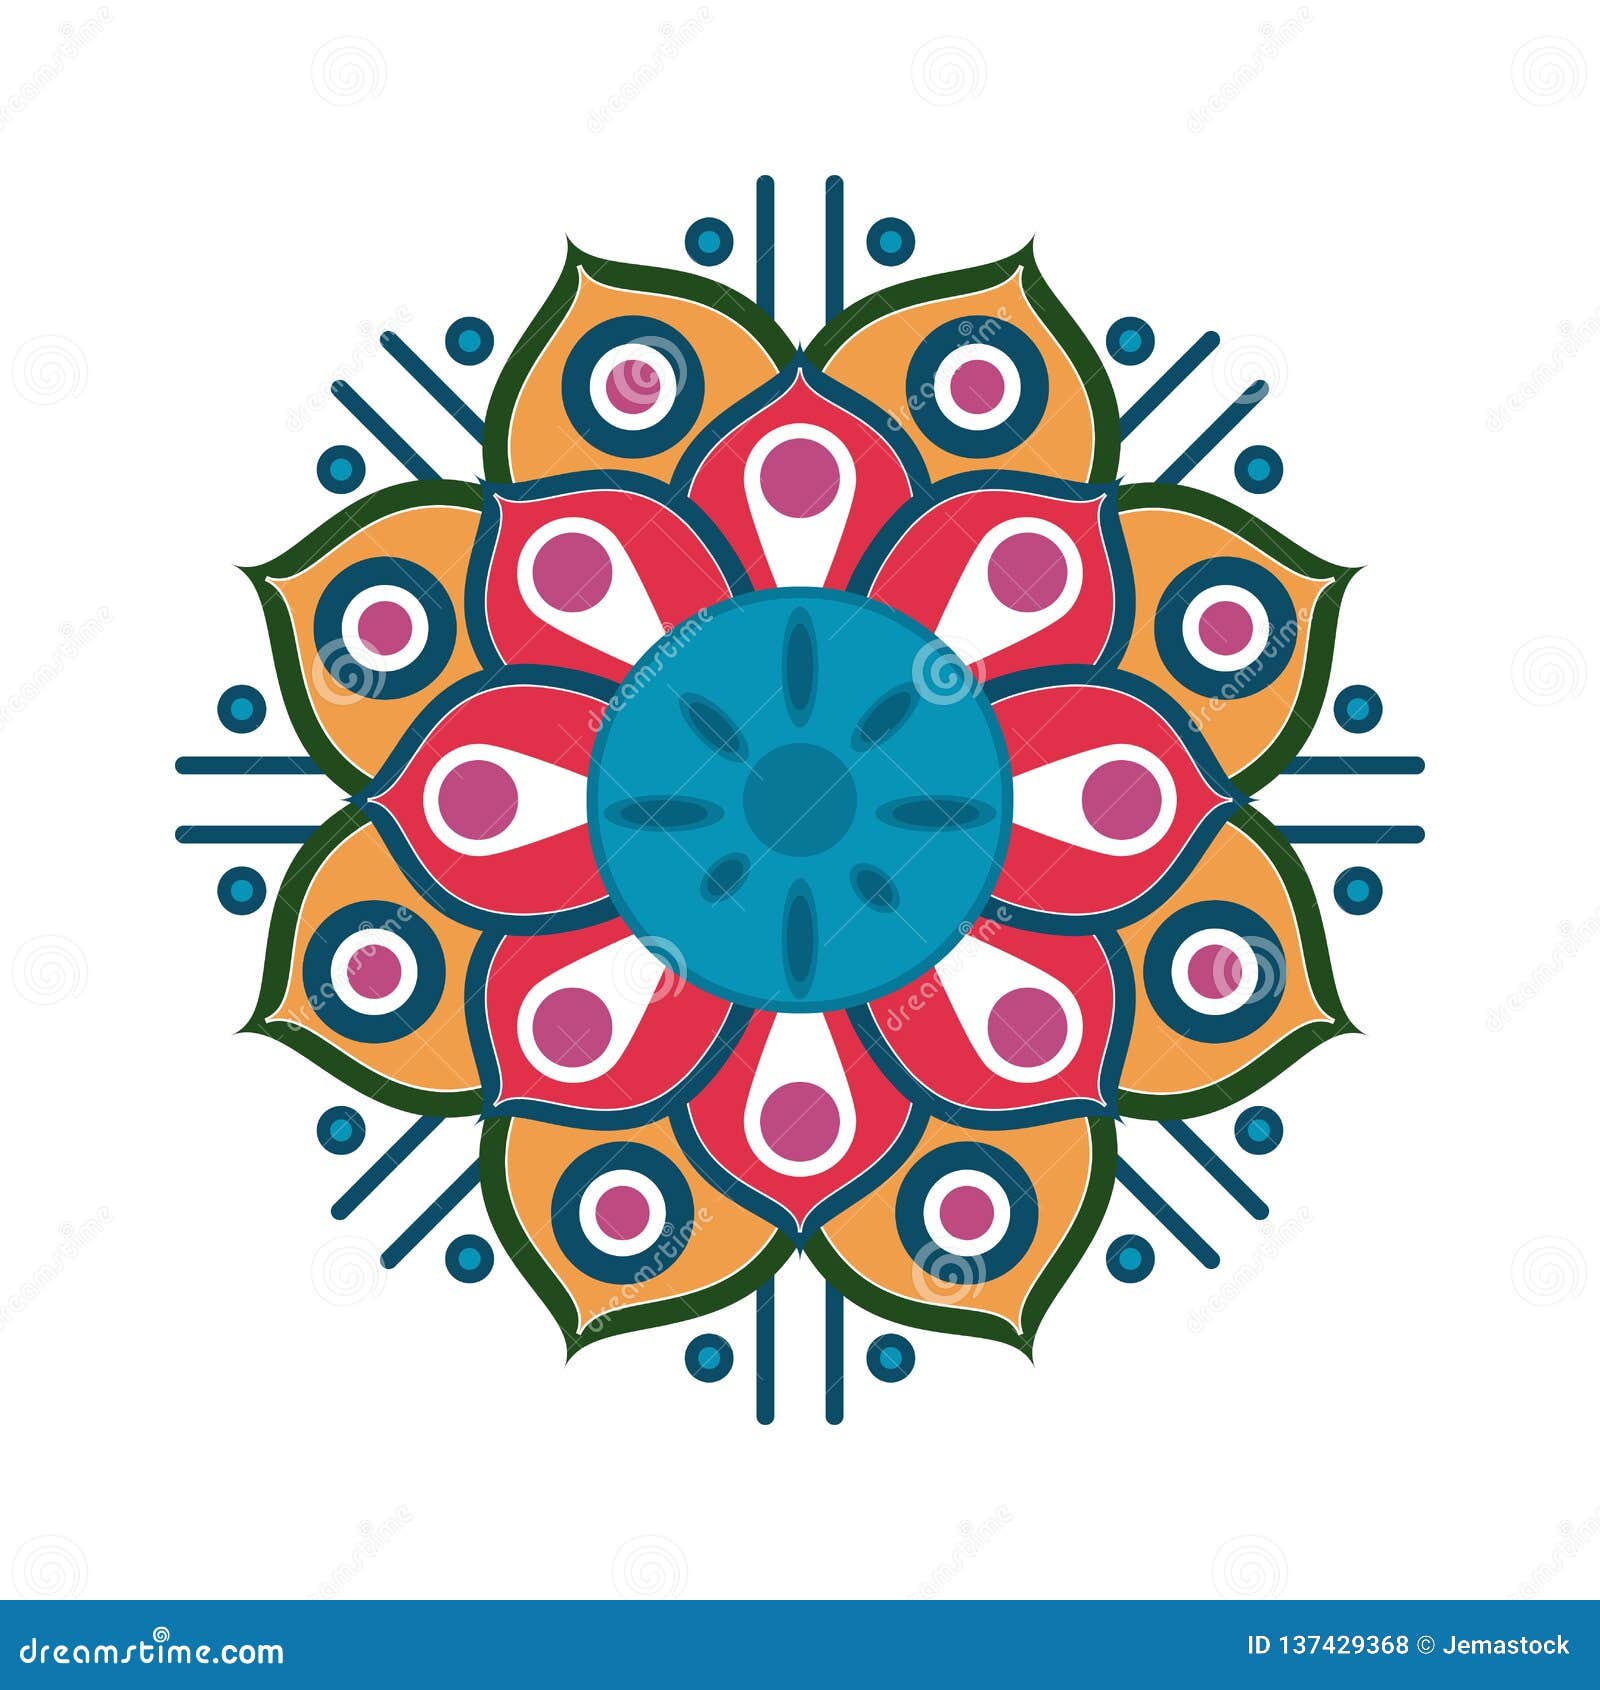 Mandala indian emblem stock vector. Illustration of bohemian - 137429368